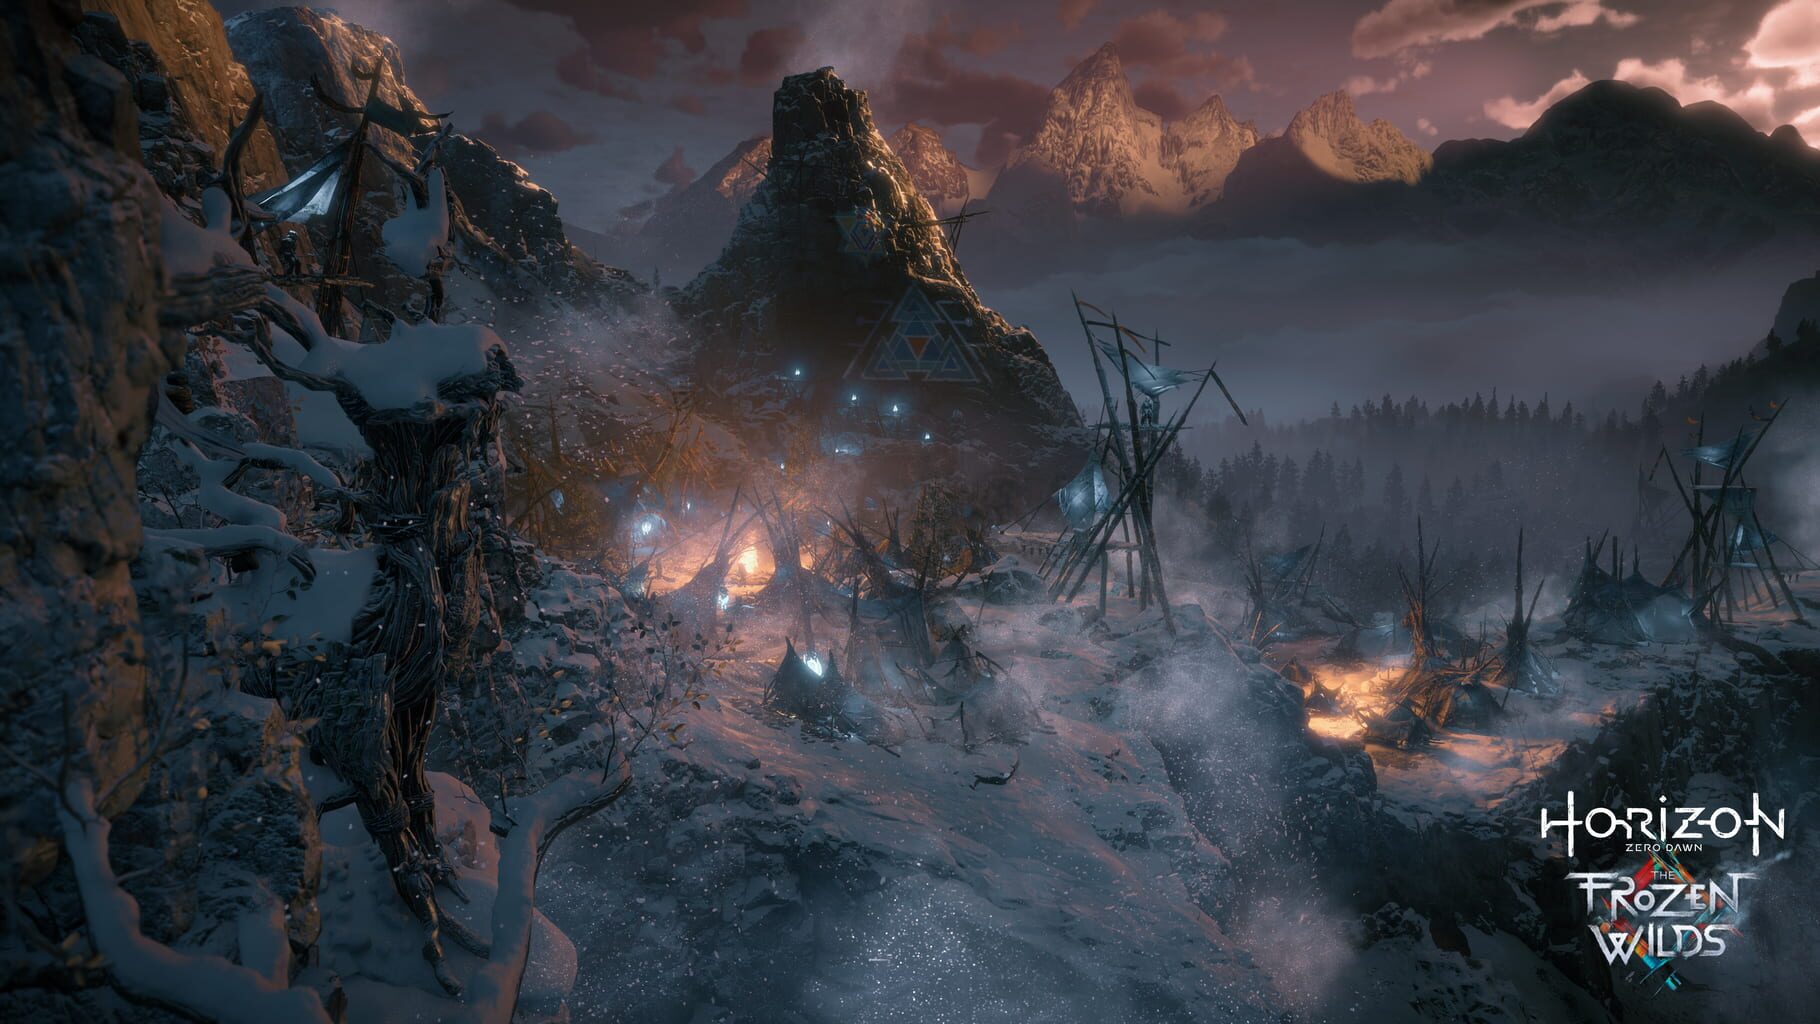 Horizon Zero Dawn: The Frozen Wilds Image